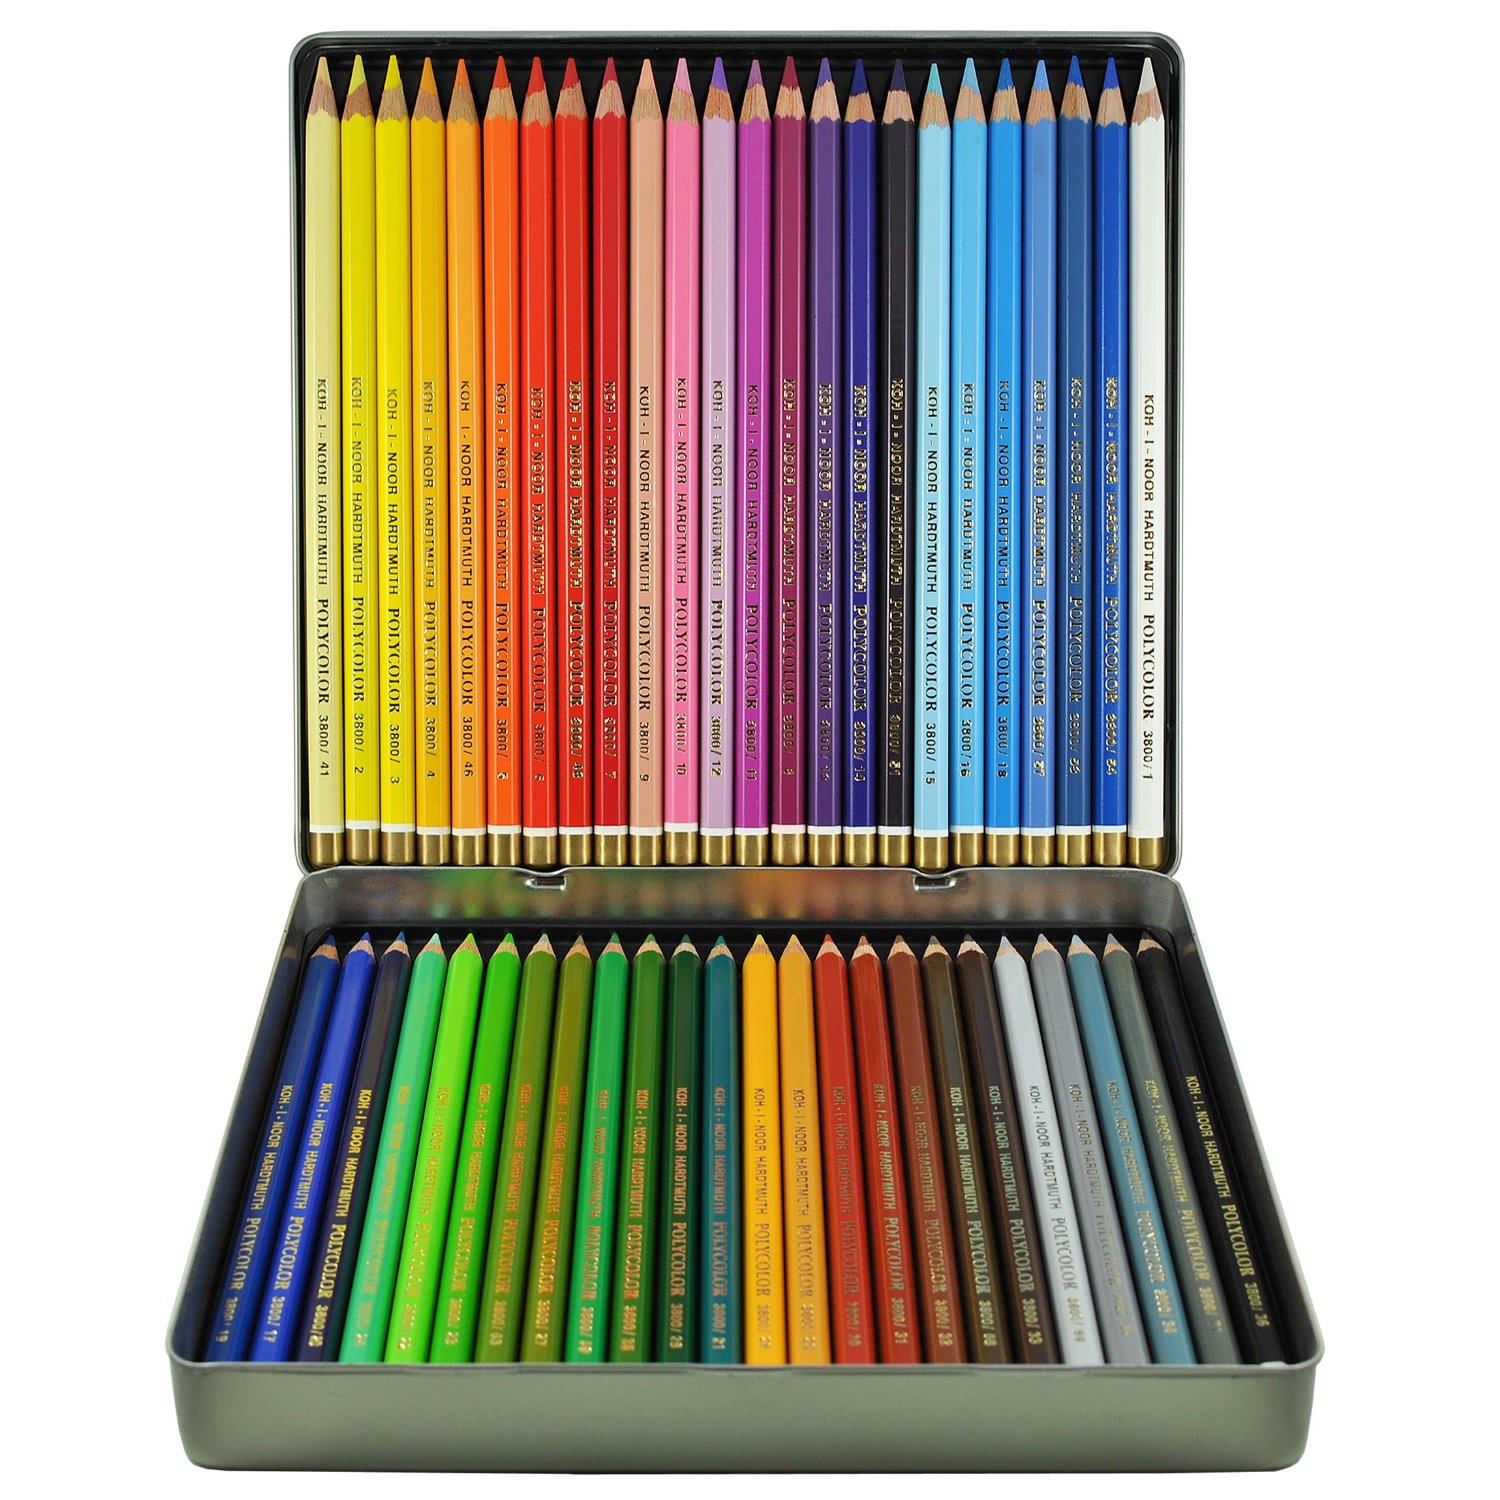 Koh-i-noor polycolor set of 48 artistic colored pencils metal pa